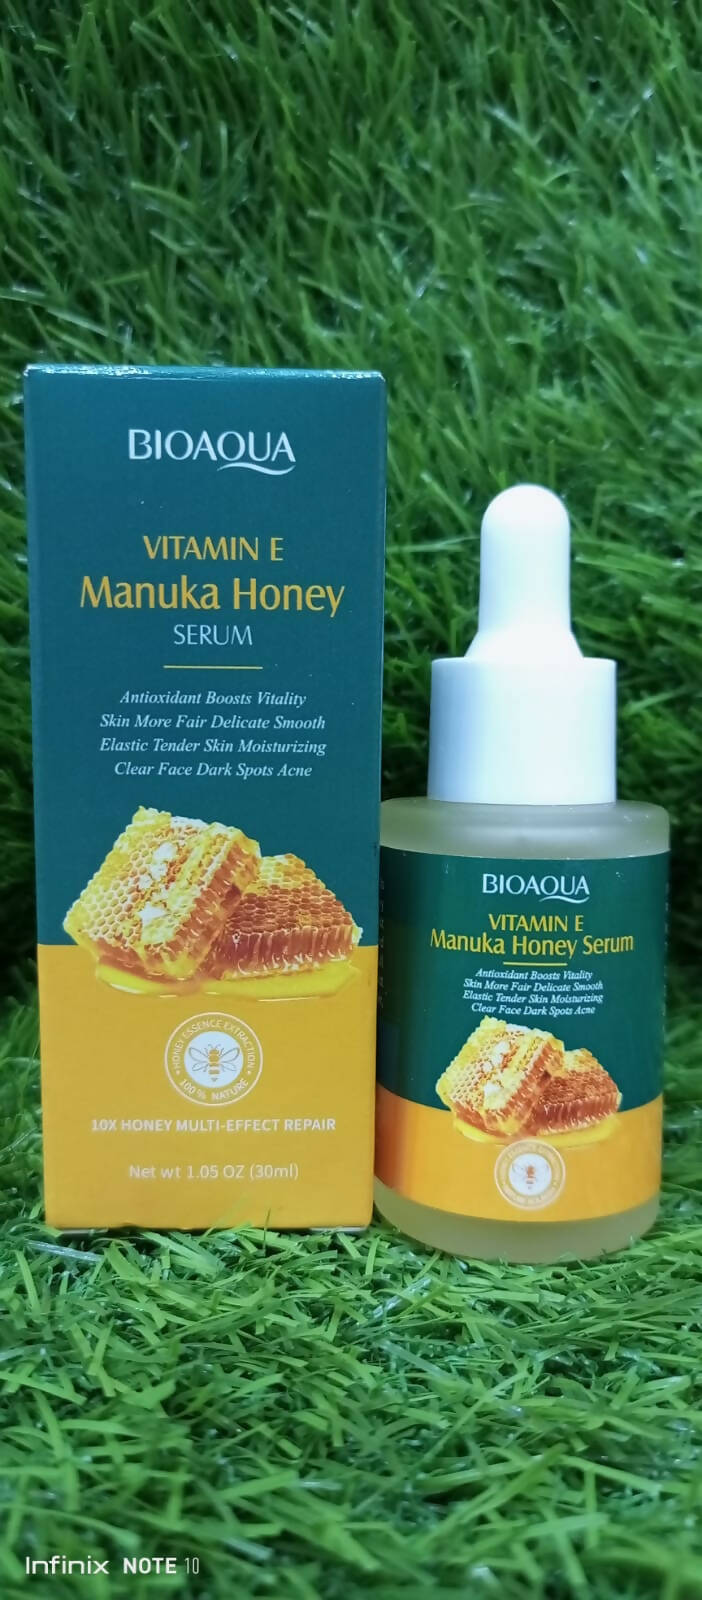 Bioaqua Vitamin E Manuka Honey Serum